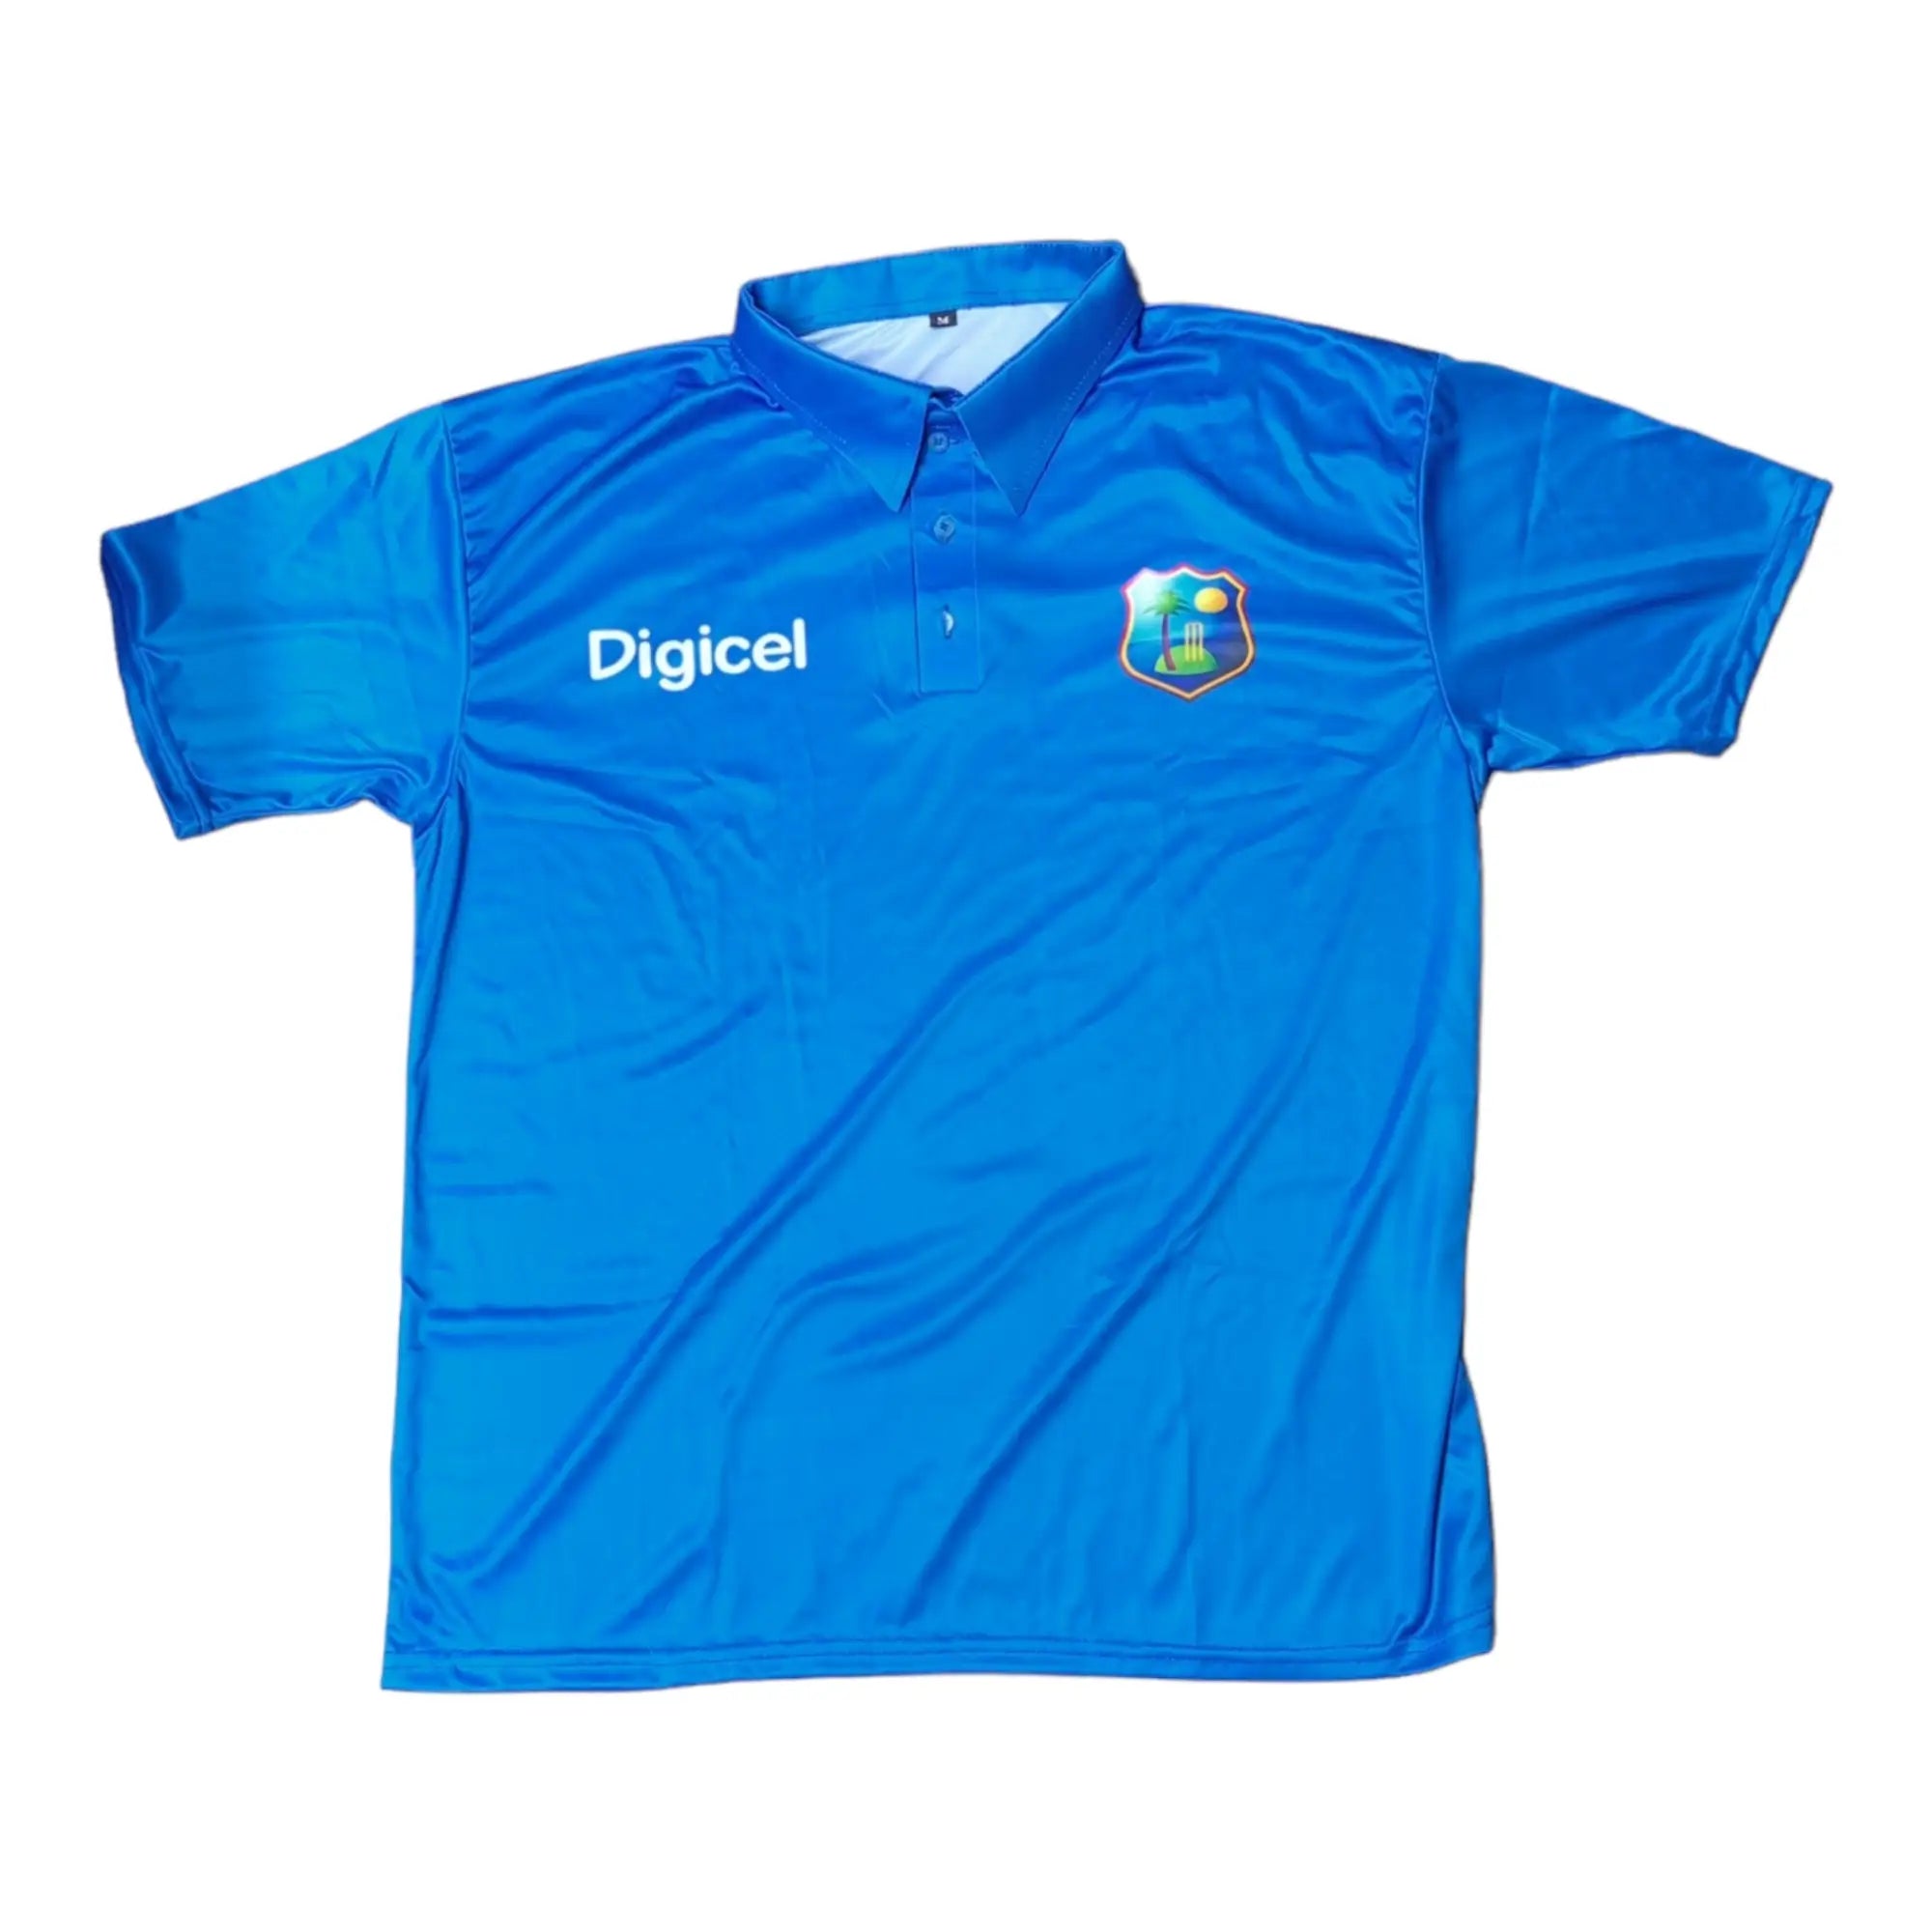 West Indies Cricket Team Royal Blue Shirt Replica - Small / Maroon - Team Shirt